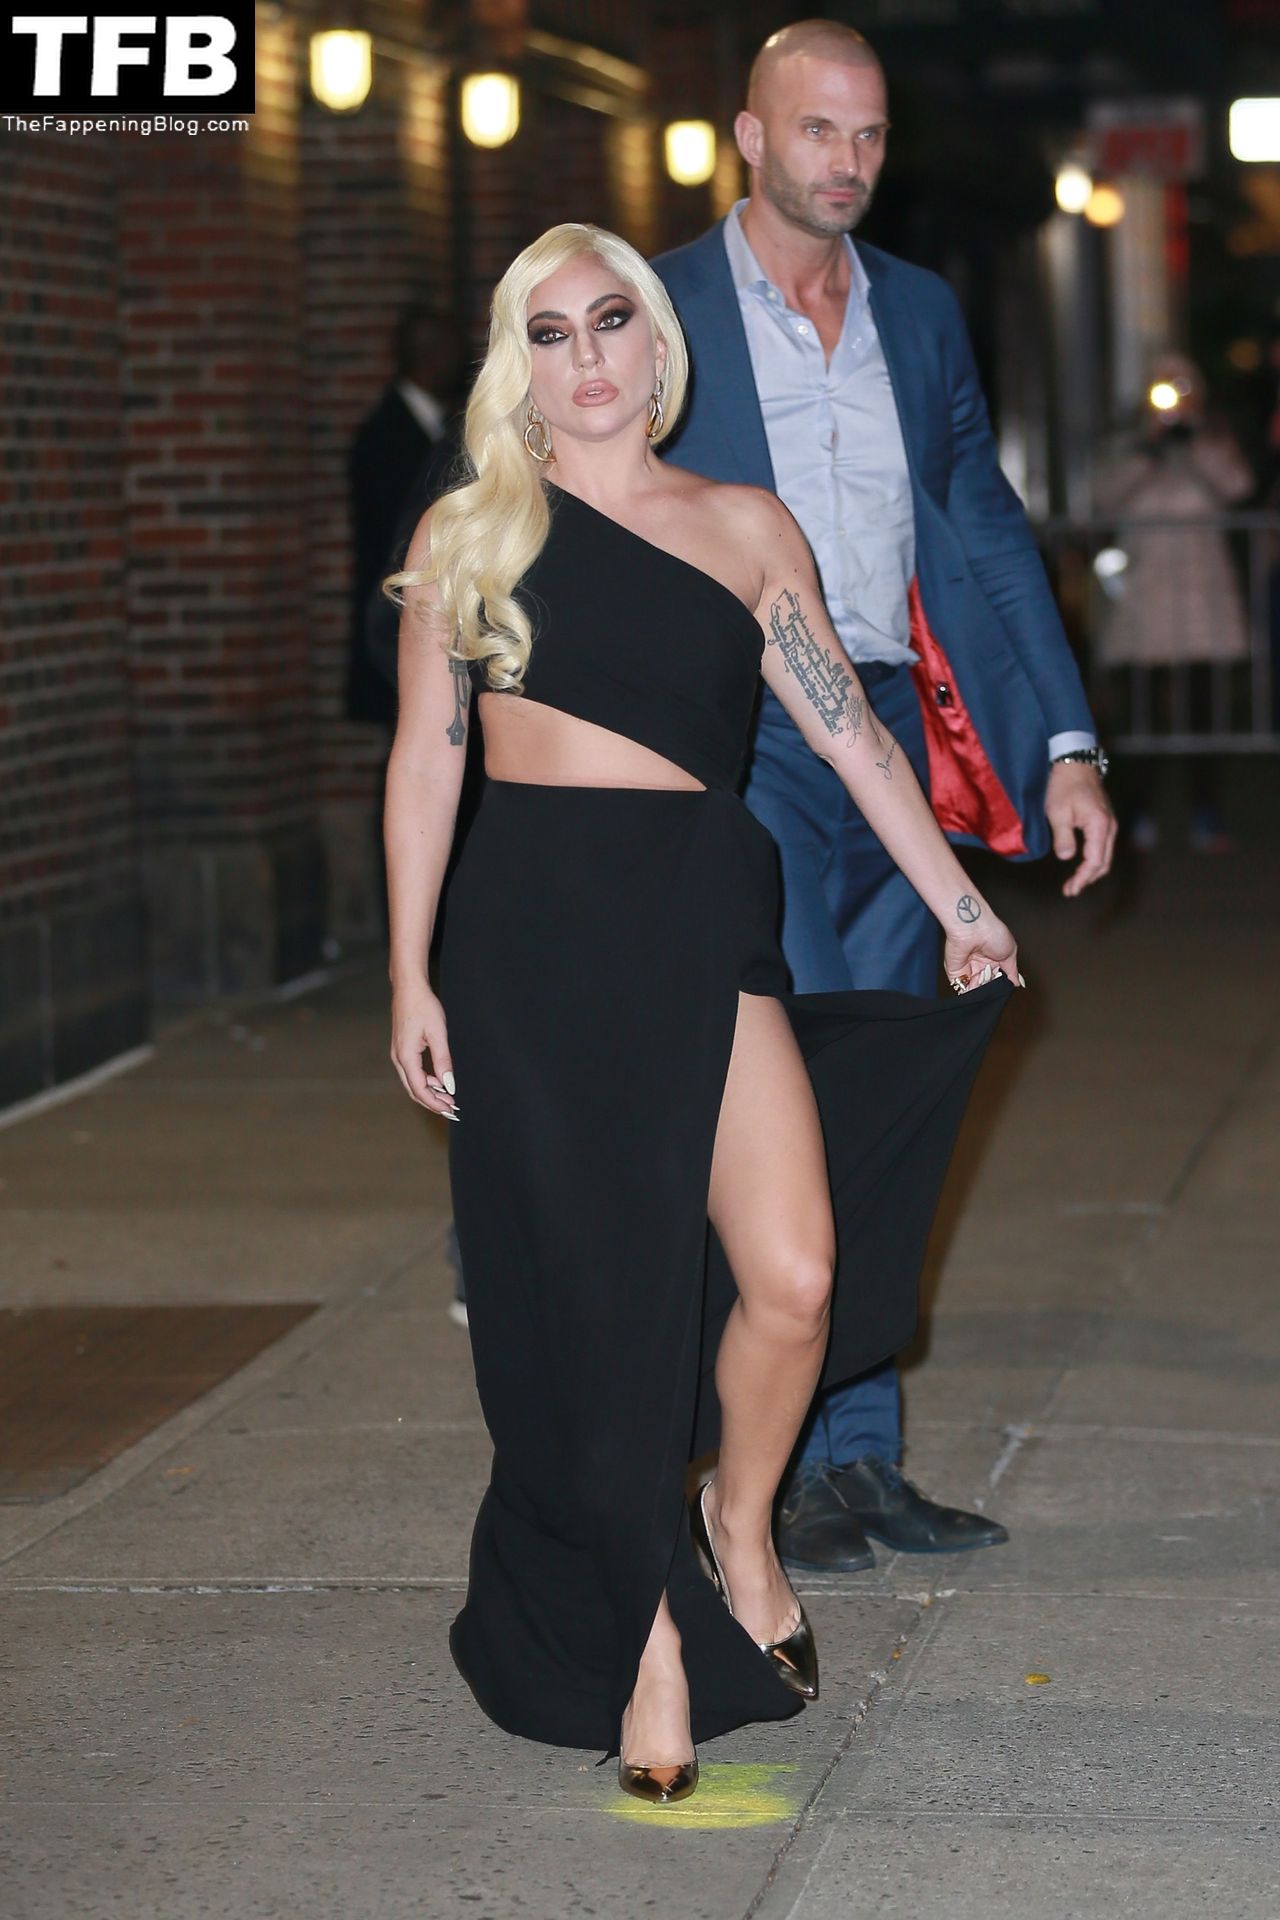 Lady-Gaga-Sexy-The-Fappening-Blog-13-1.jpg